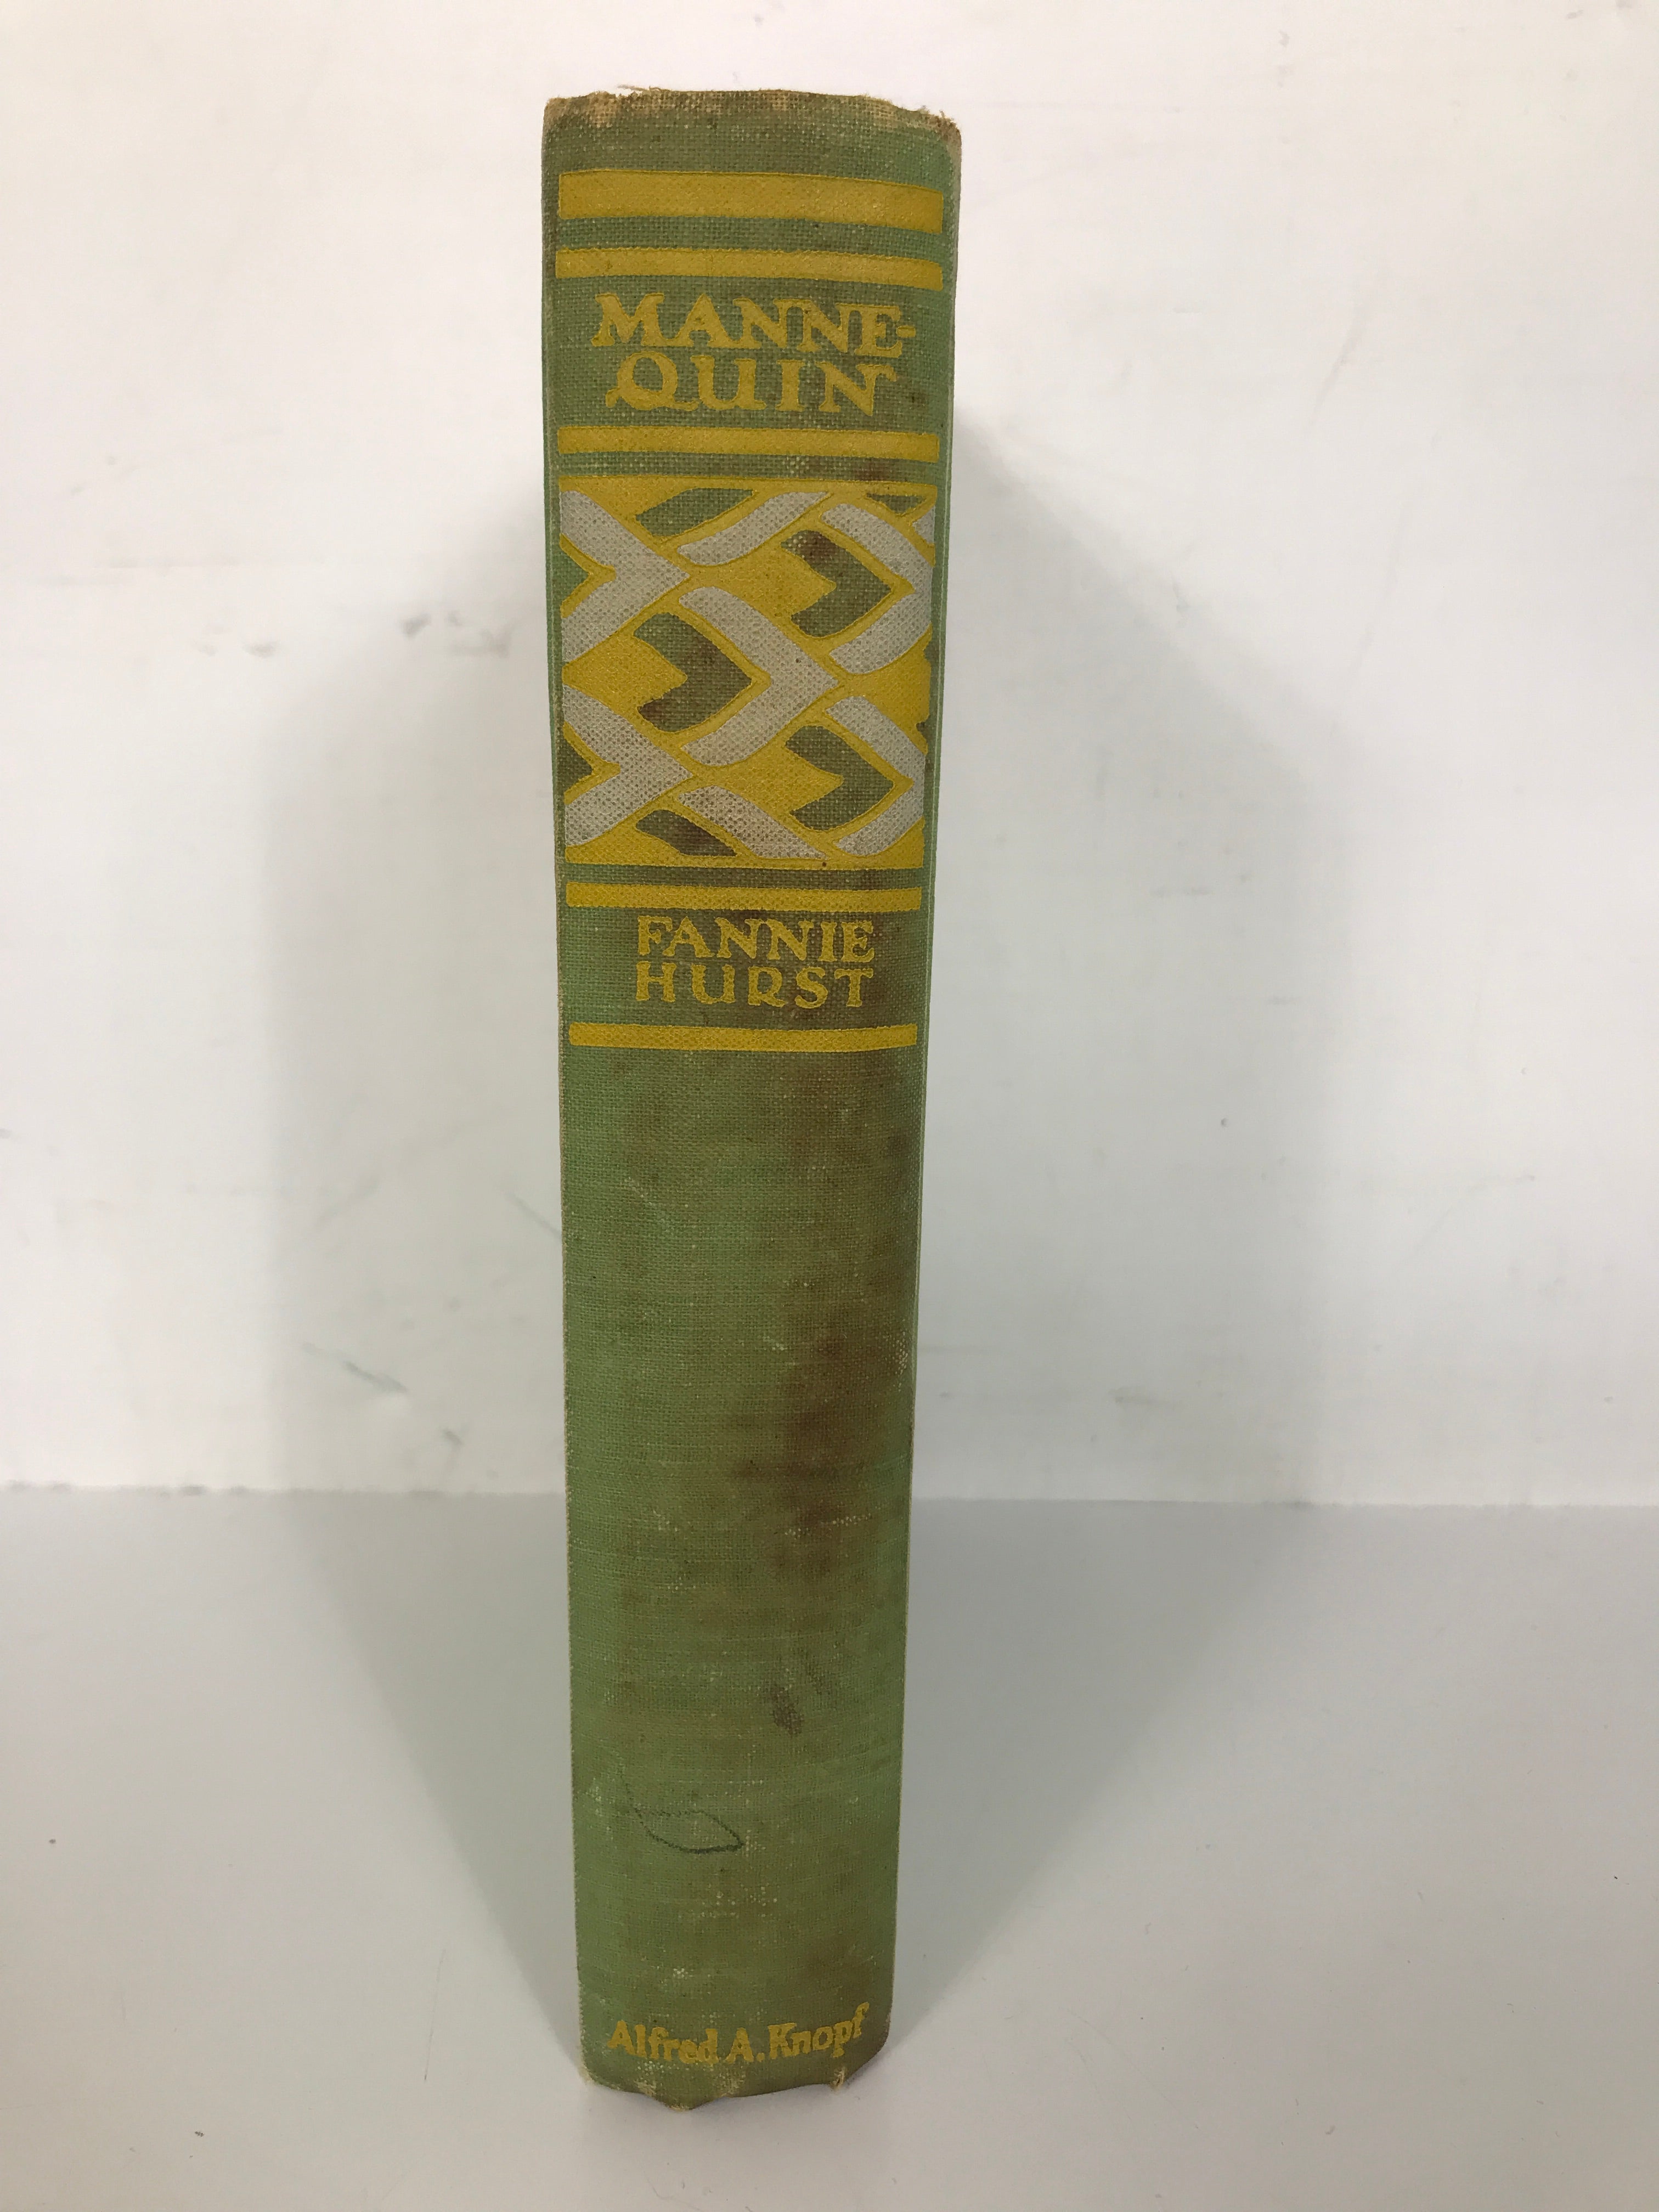 Vintage Novel: Mannequin by Fannie Hurst 1926 HC